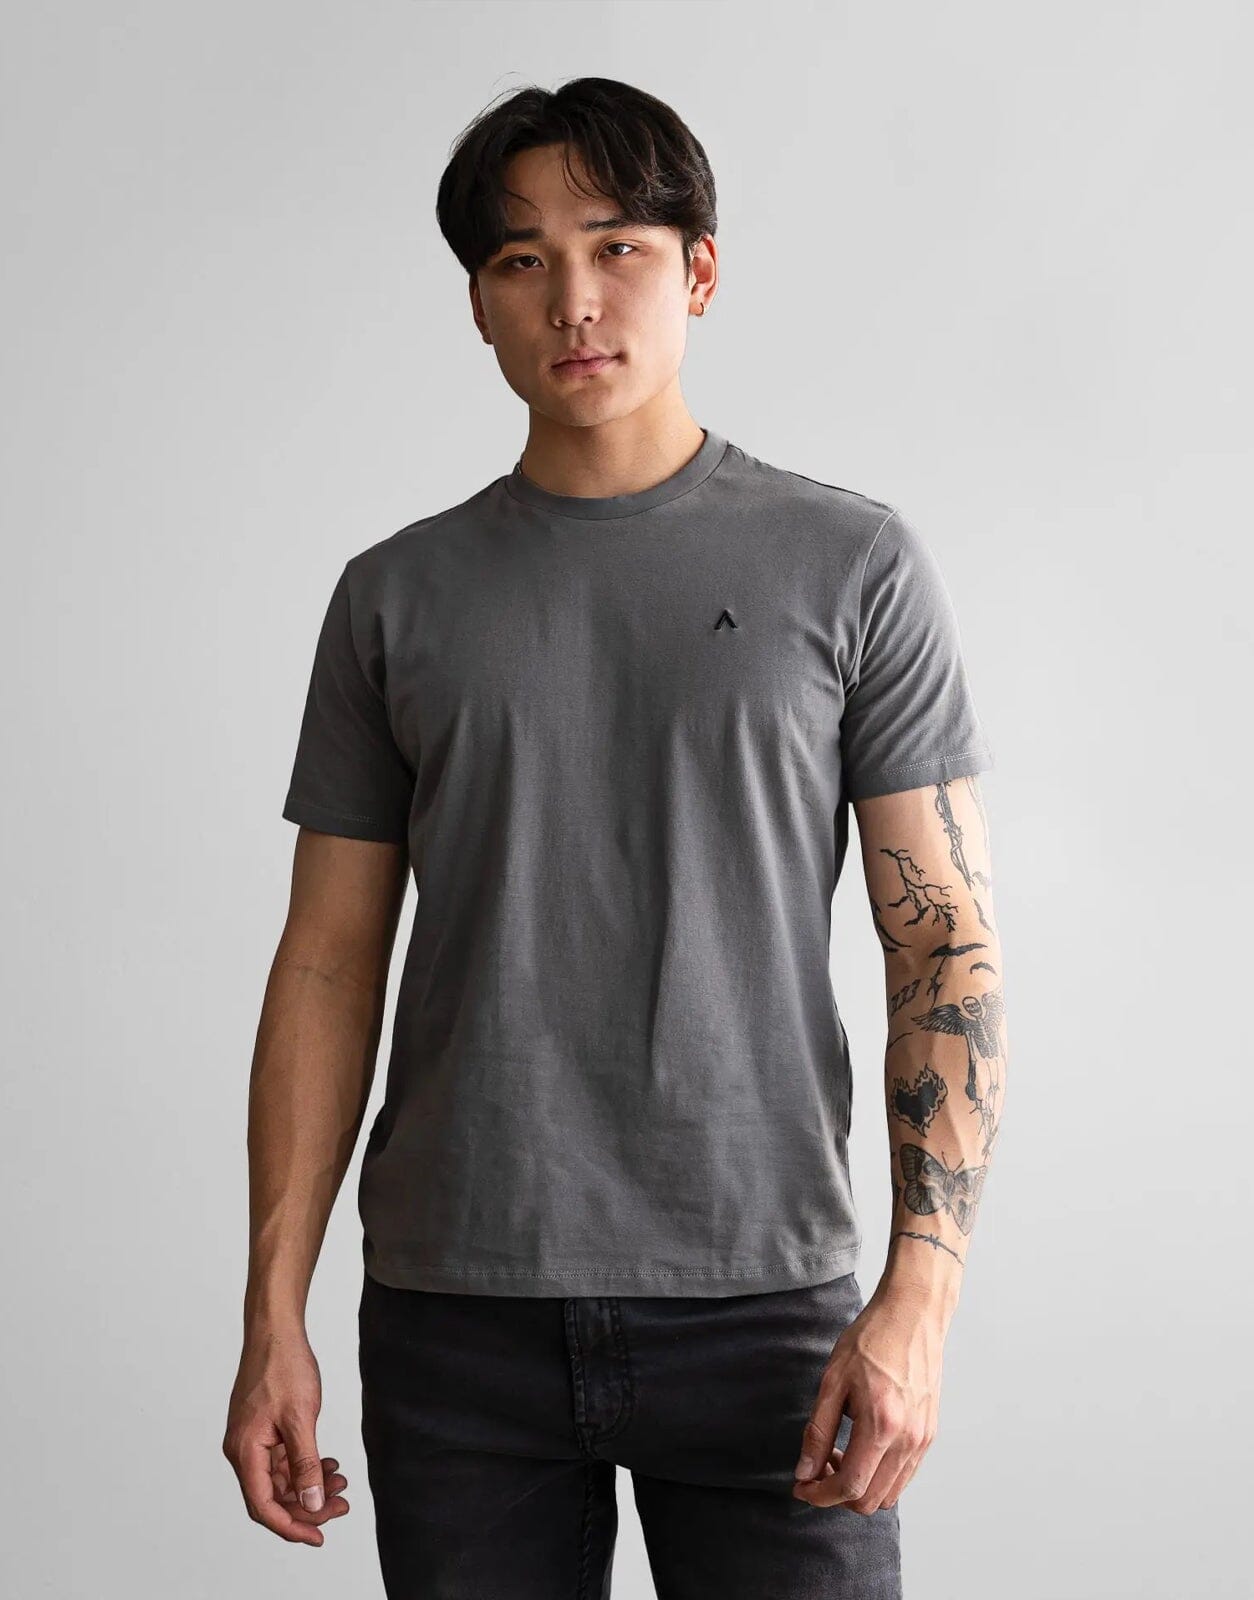 Fade Icon Grey T-Shirt - Subwear